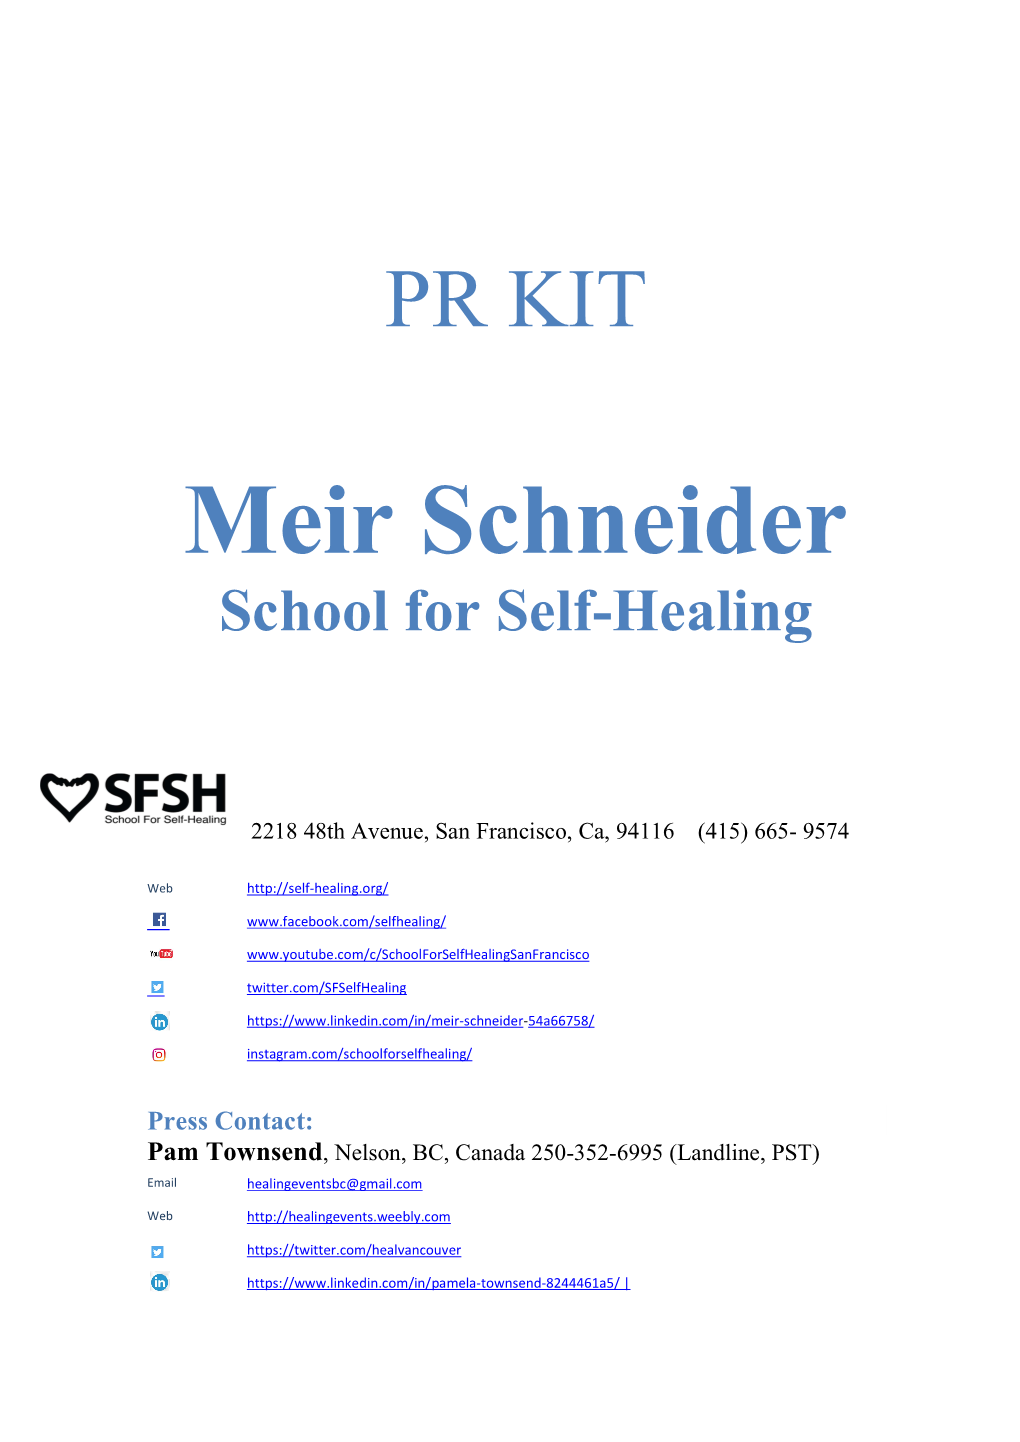 Meir Schneider's School for Self Healing